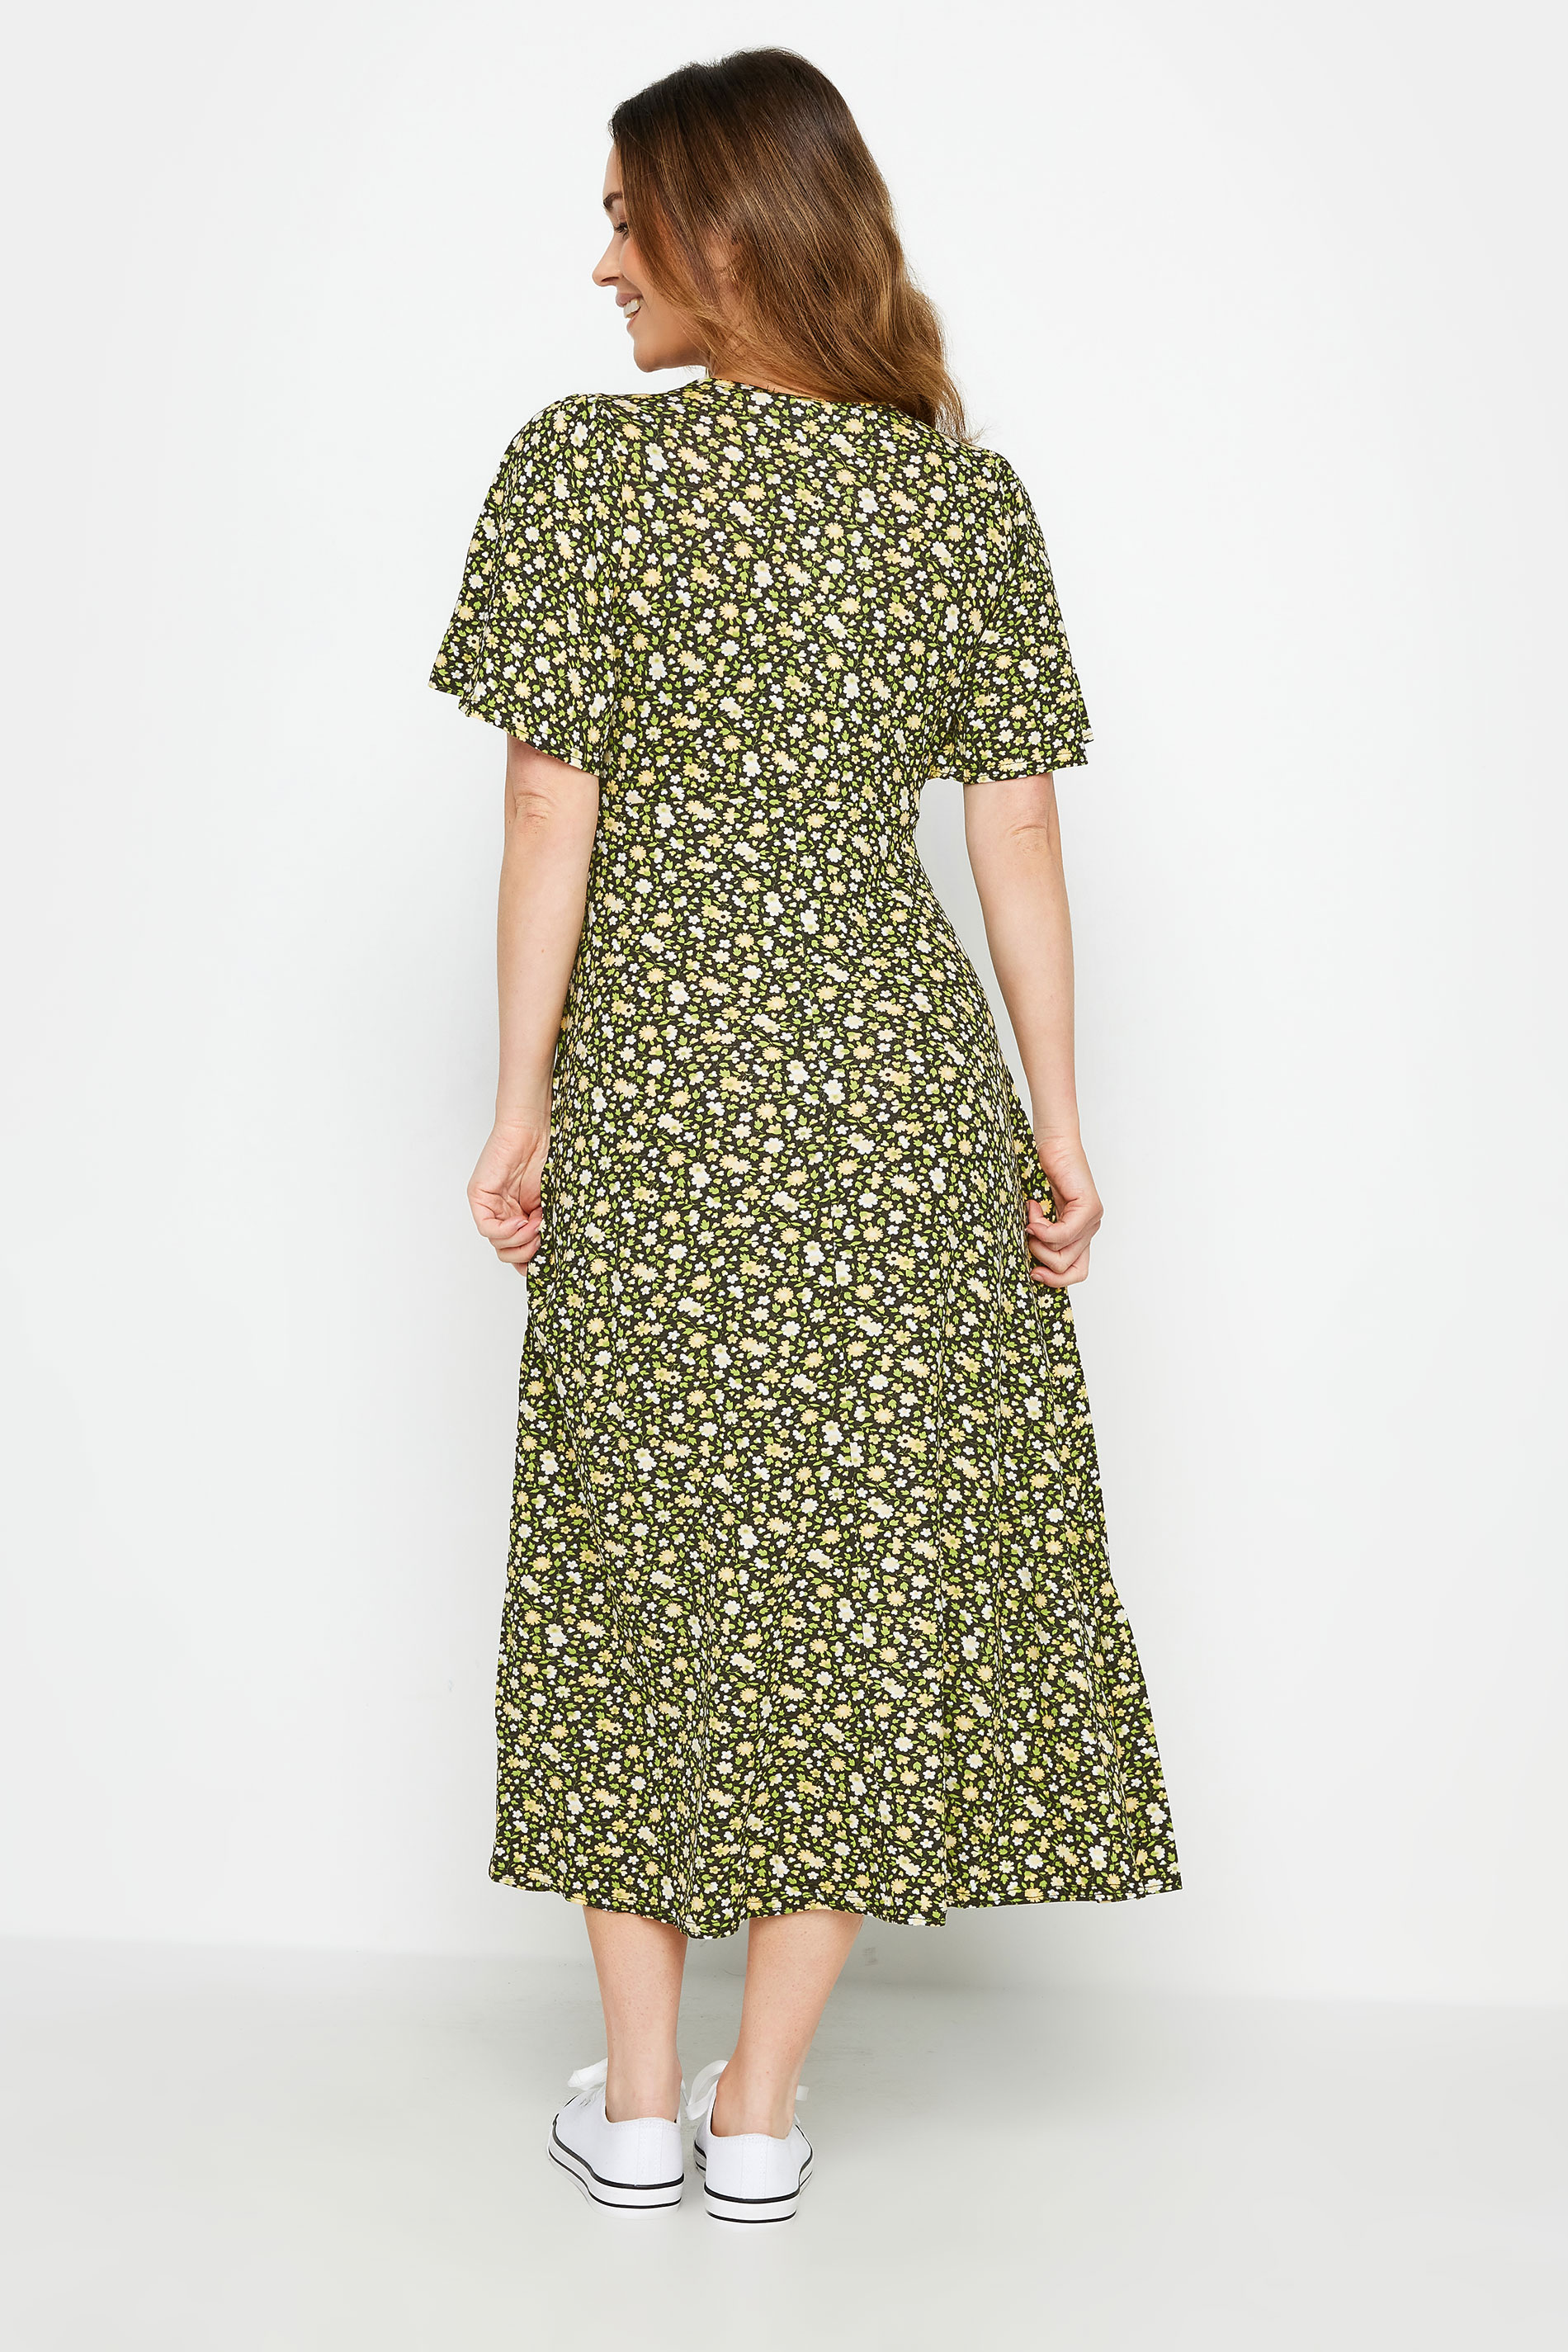 M&Co Petite Green & Yellow Ditsy Floral Print Dress | M&Co 3